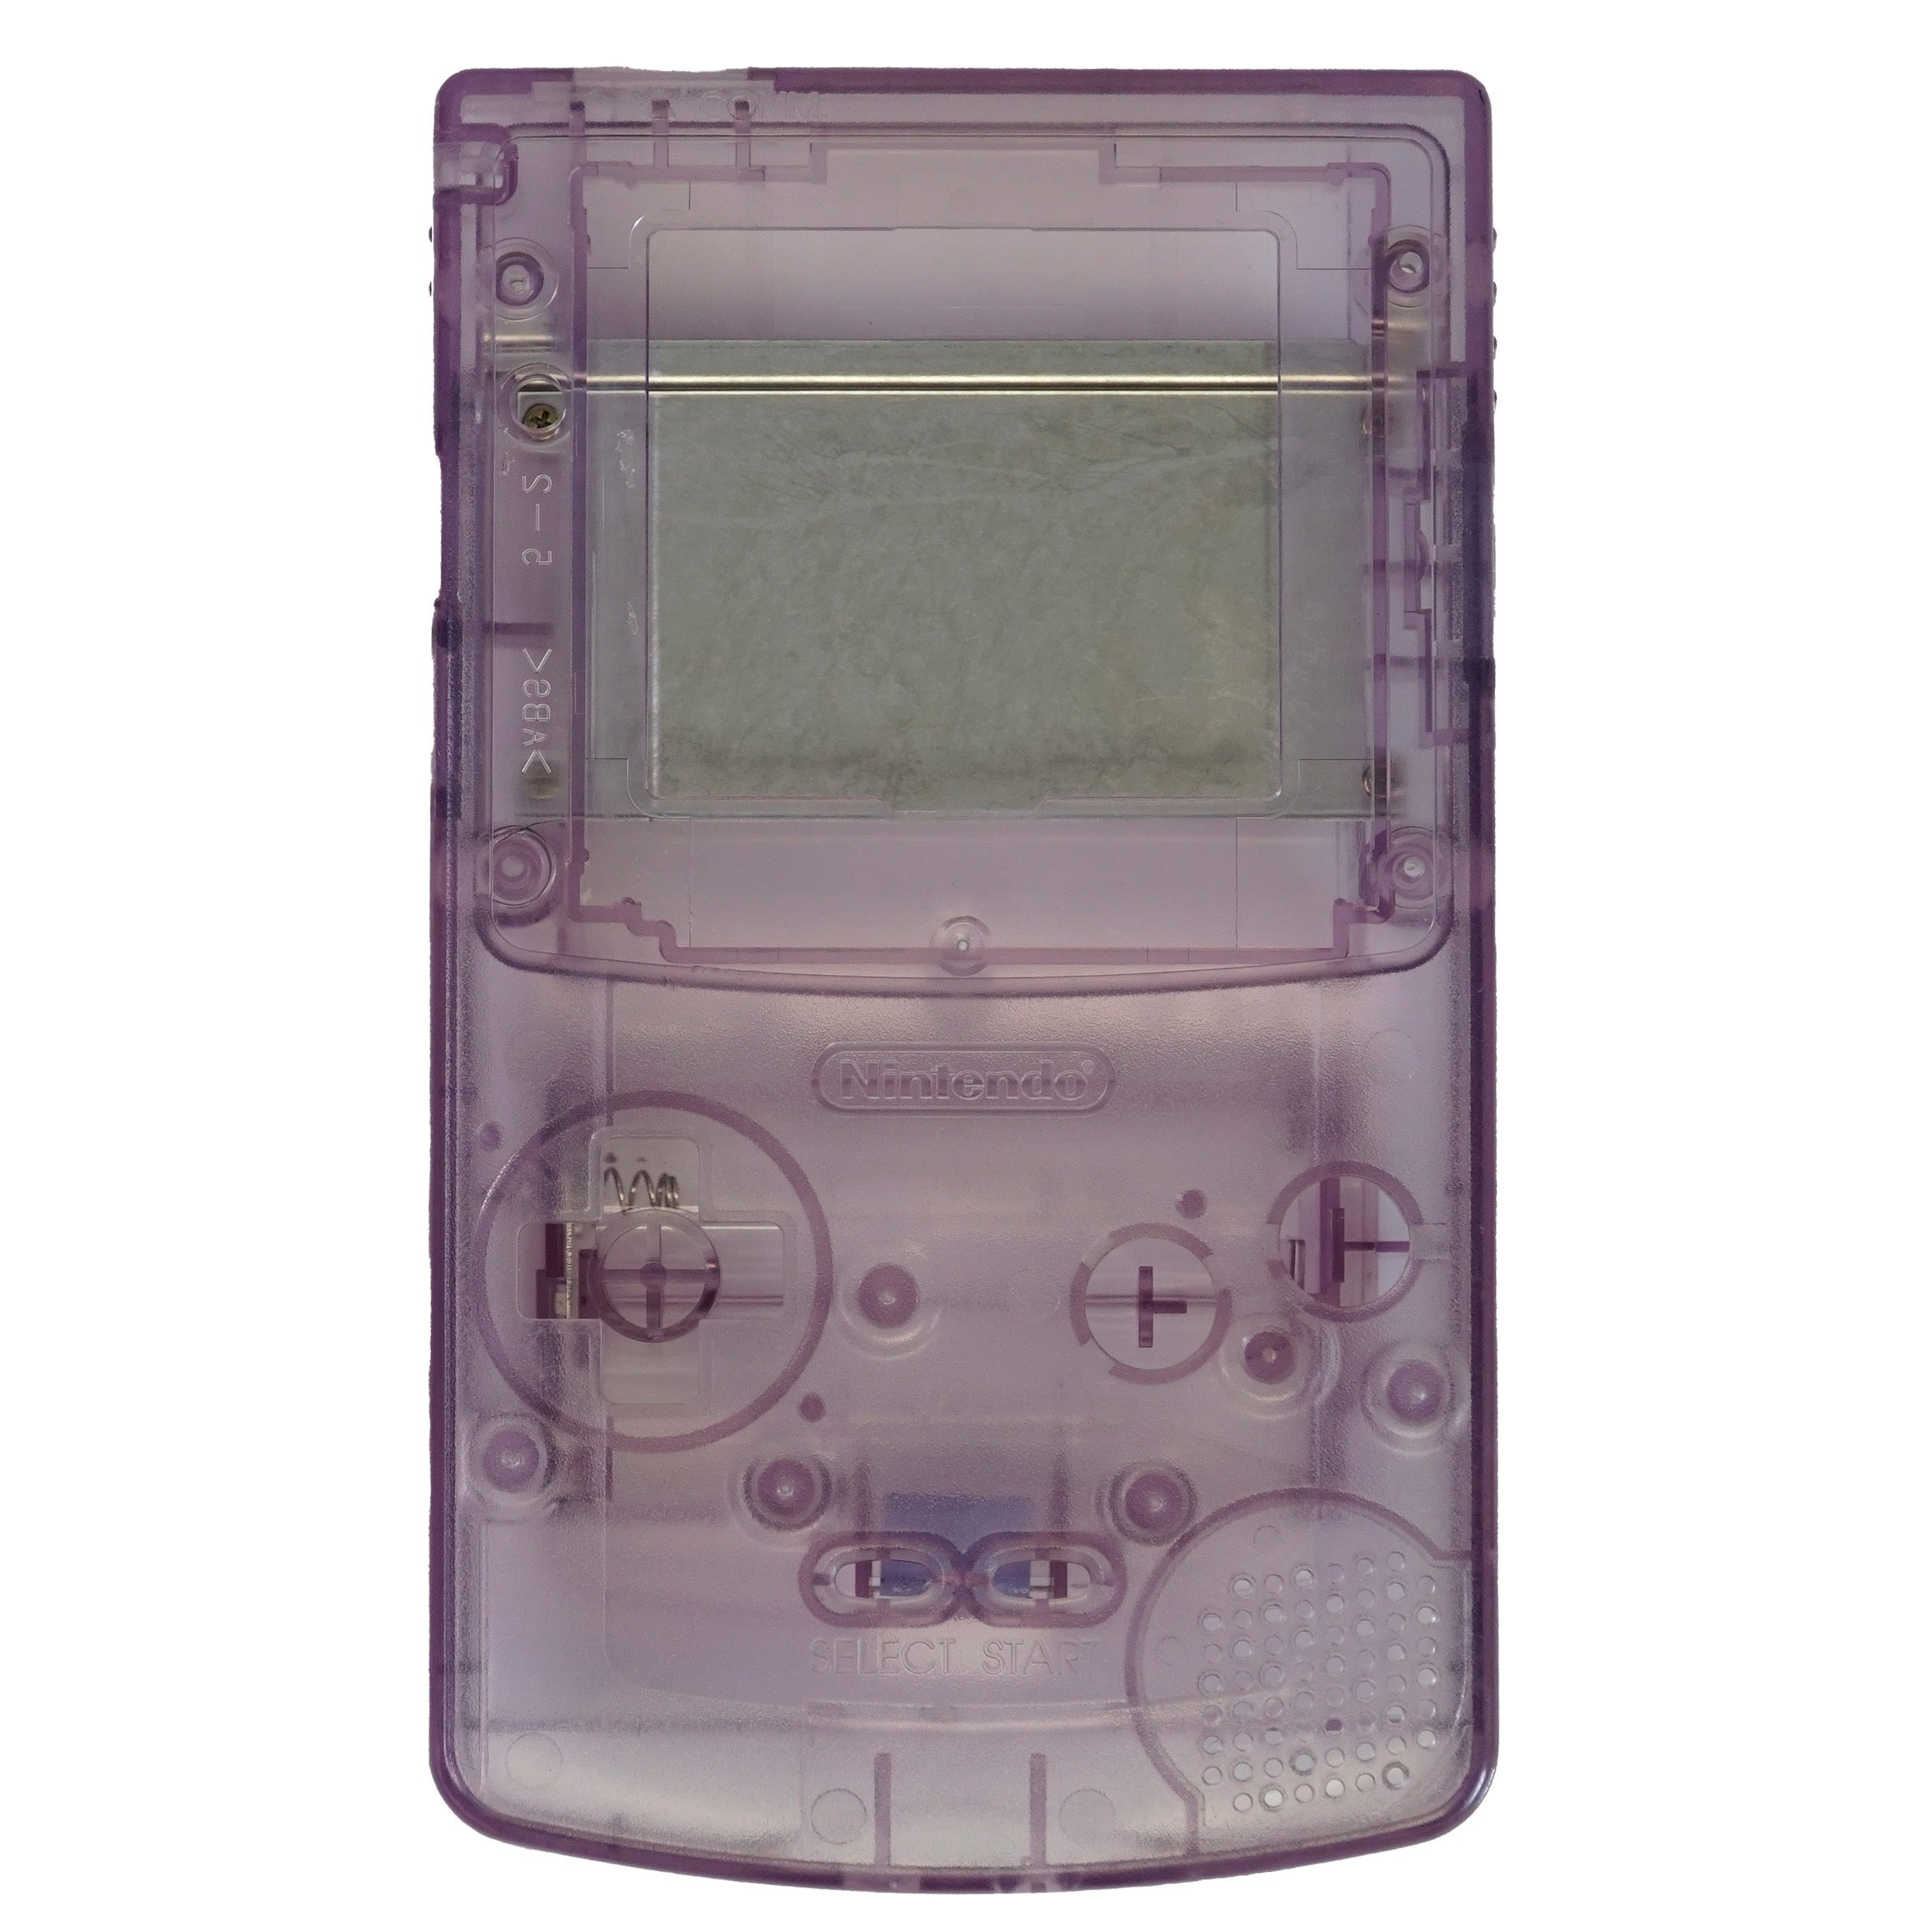 Buy Nintendo Game Boy Color (Atomic Purple or Dandelion) (USED